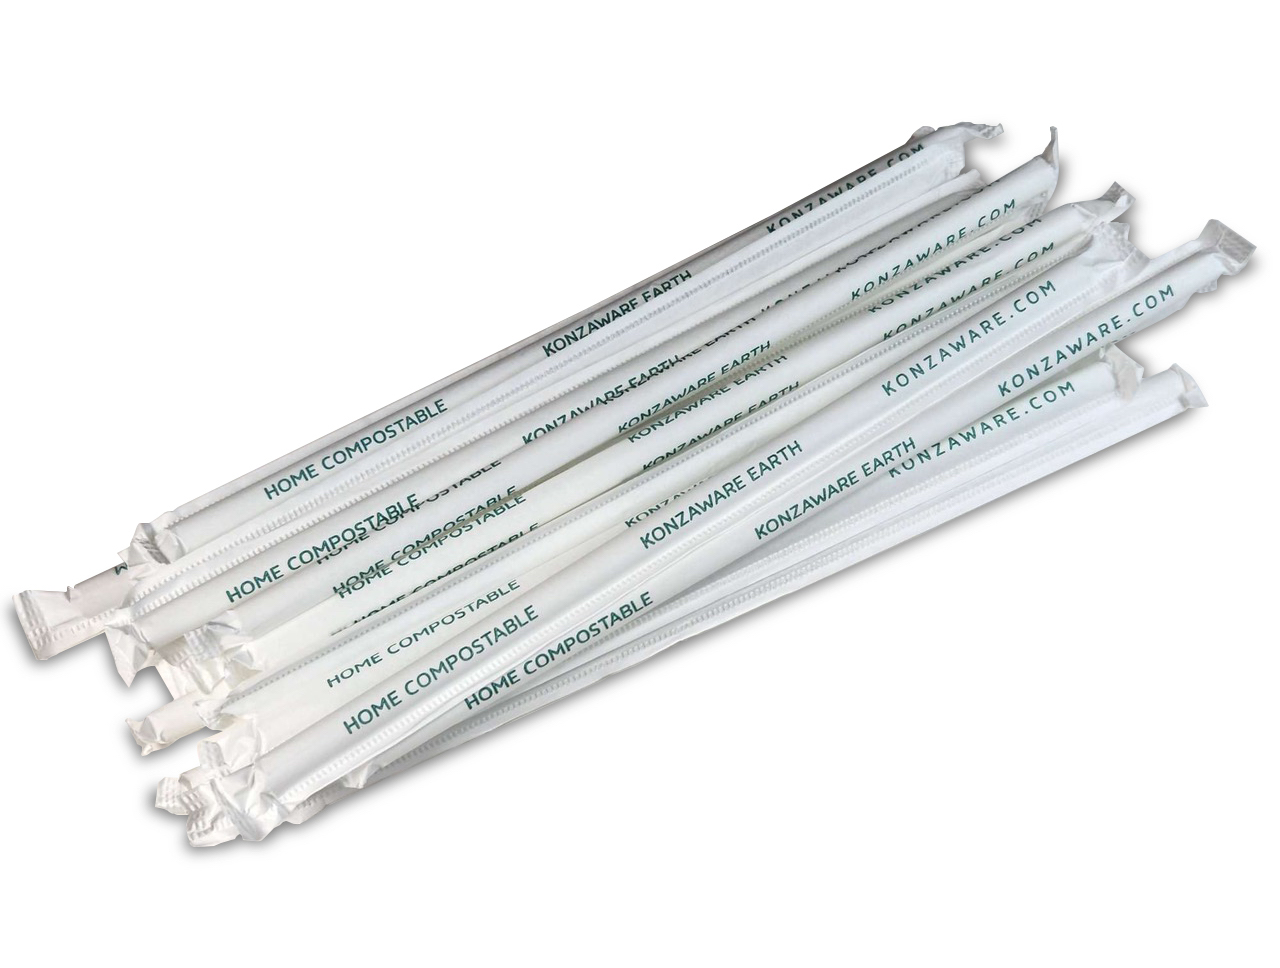 biodegradable straws sample pack